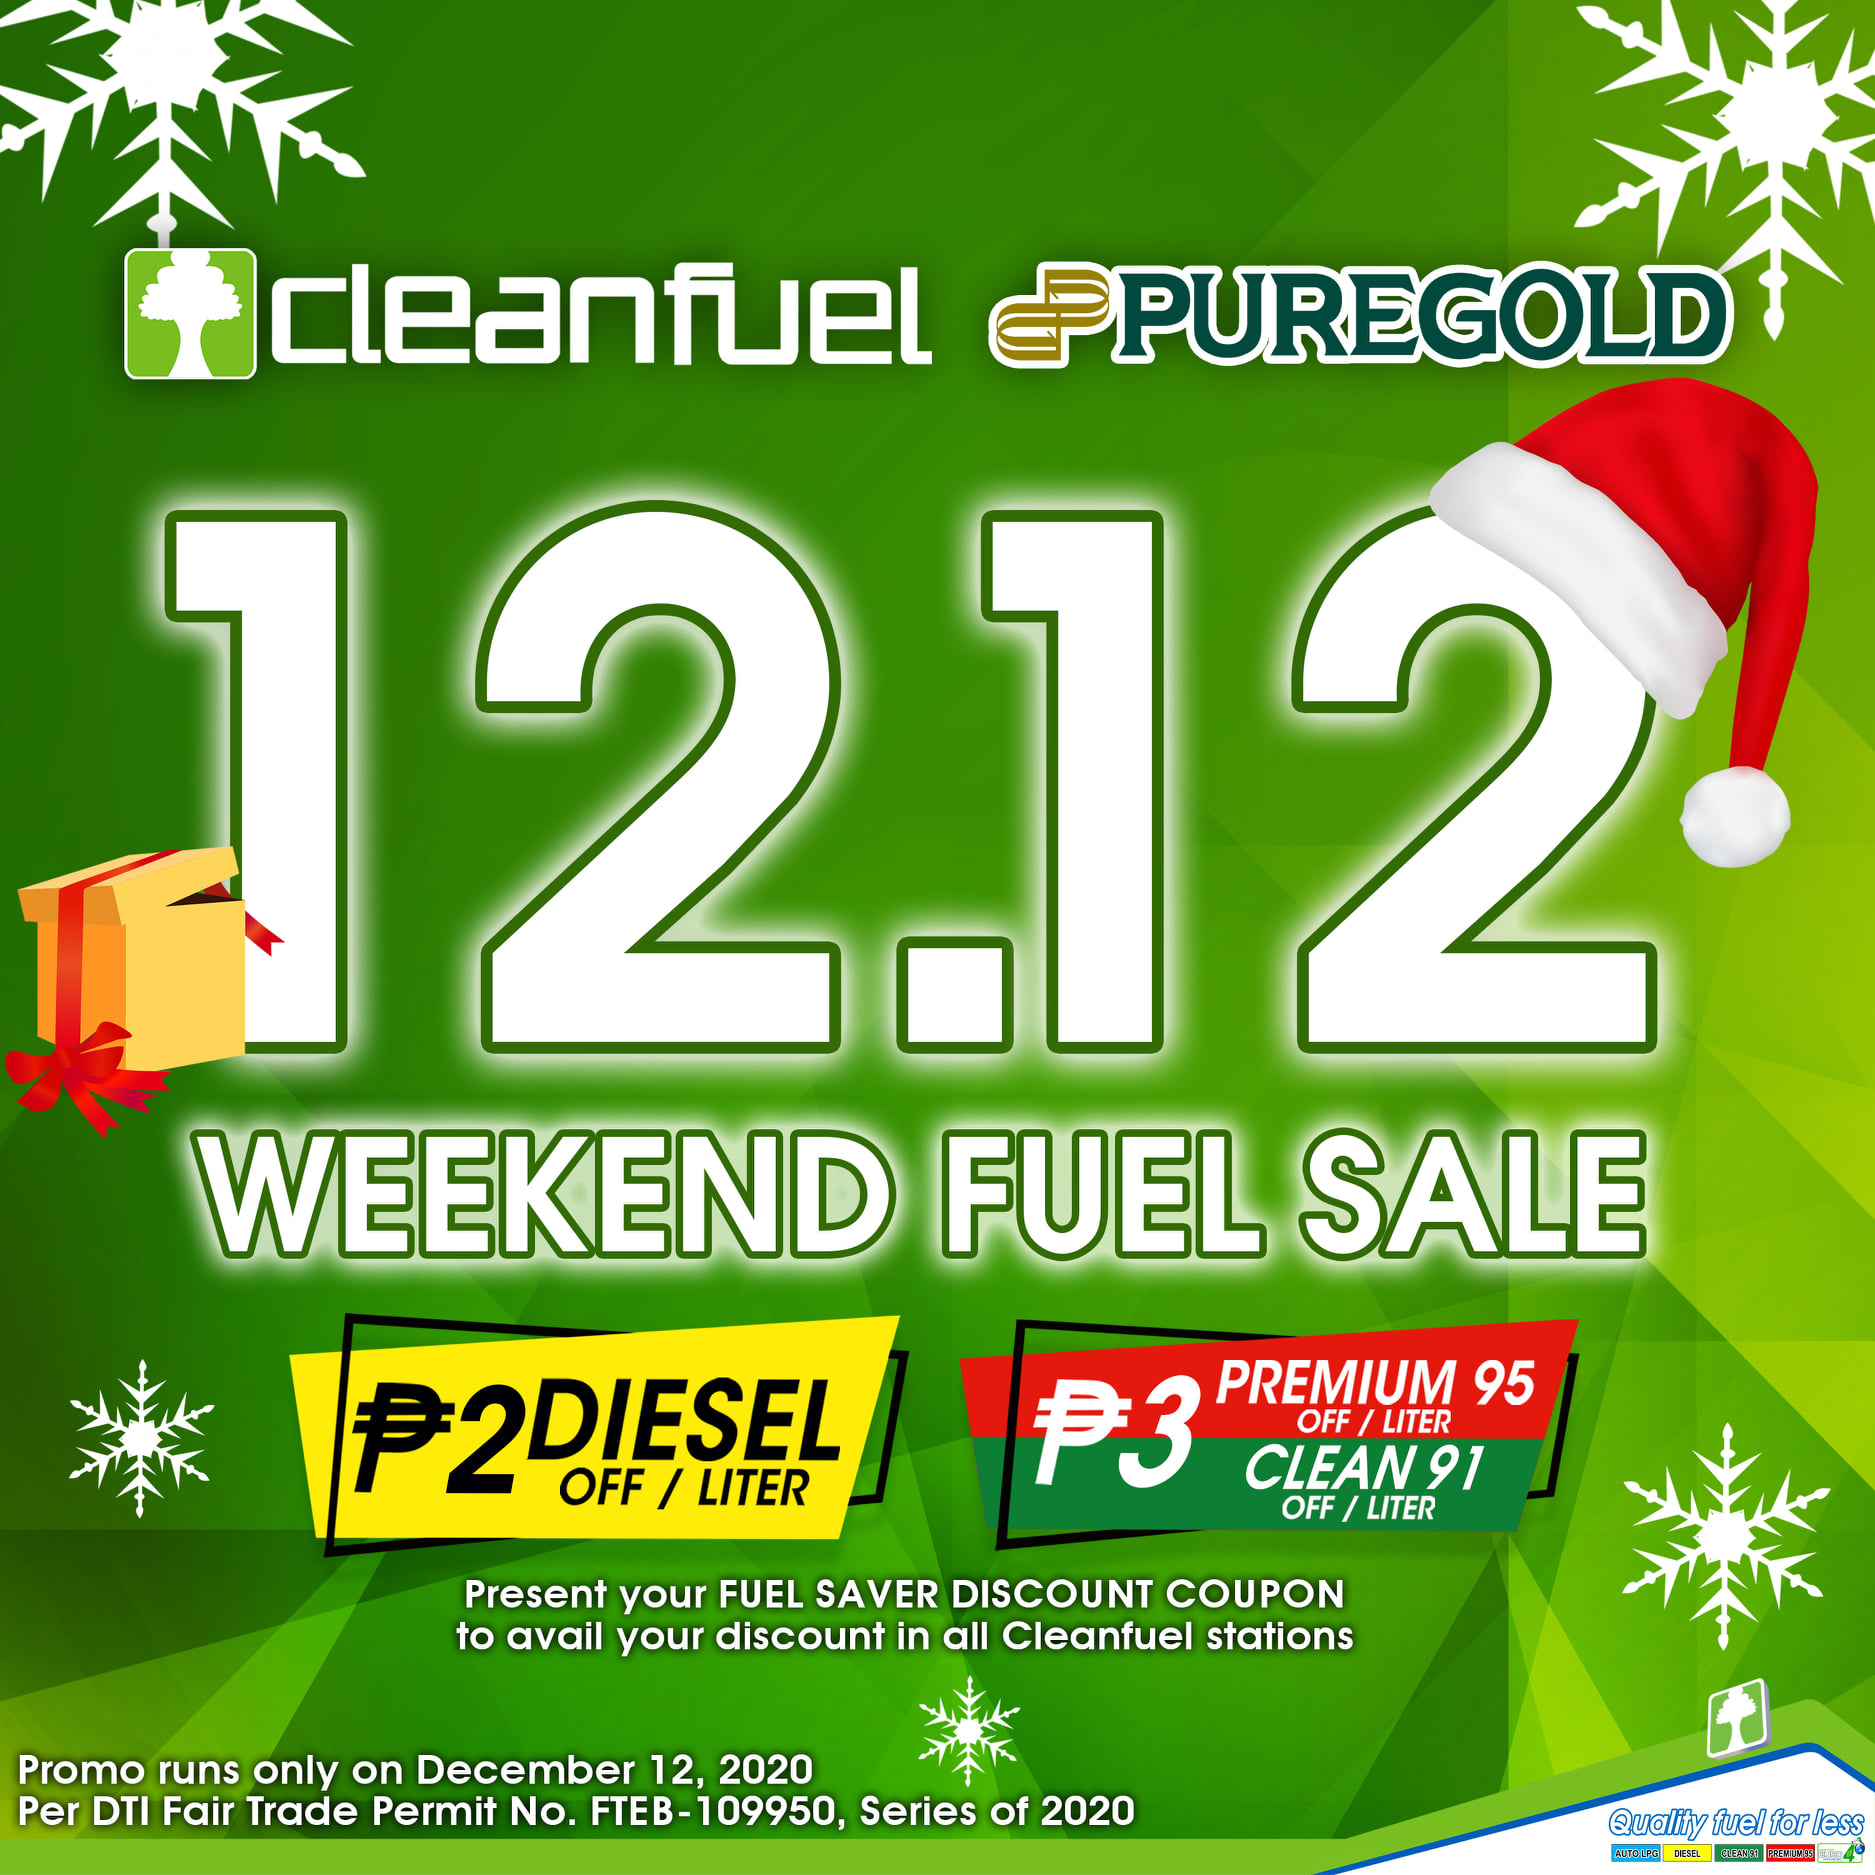 Cleanfuel’s 12.12 Weekend Fuel Sale Promo! Clean Fuel